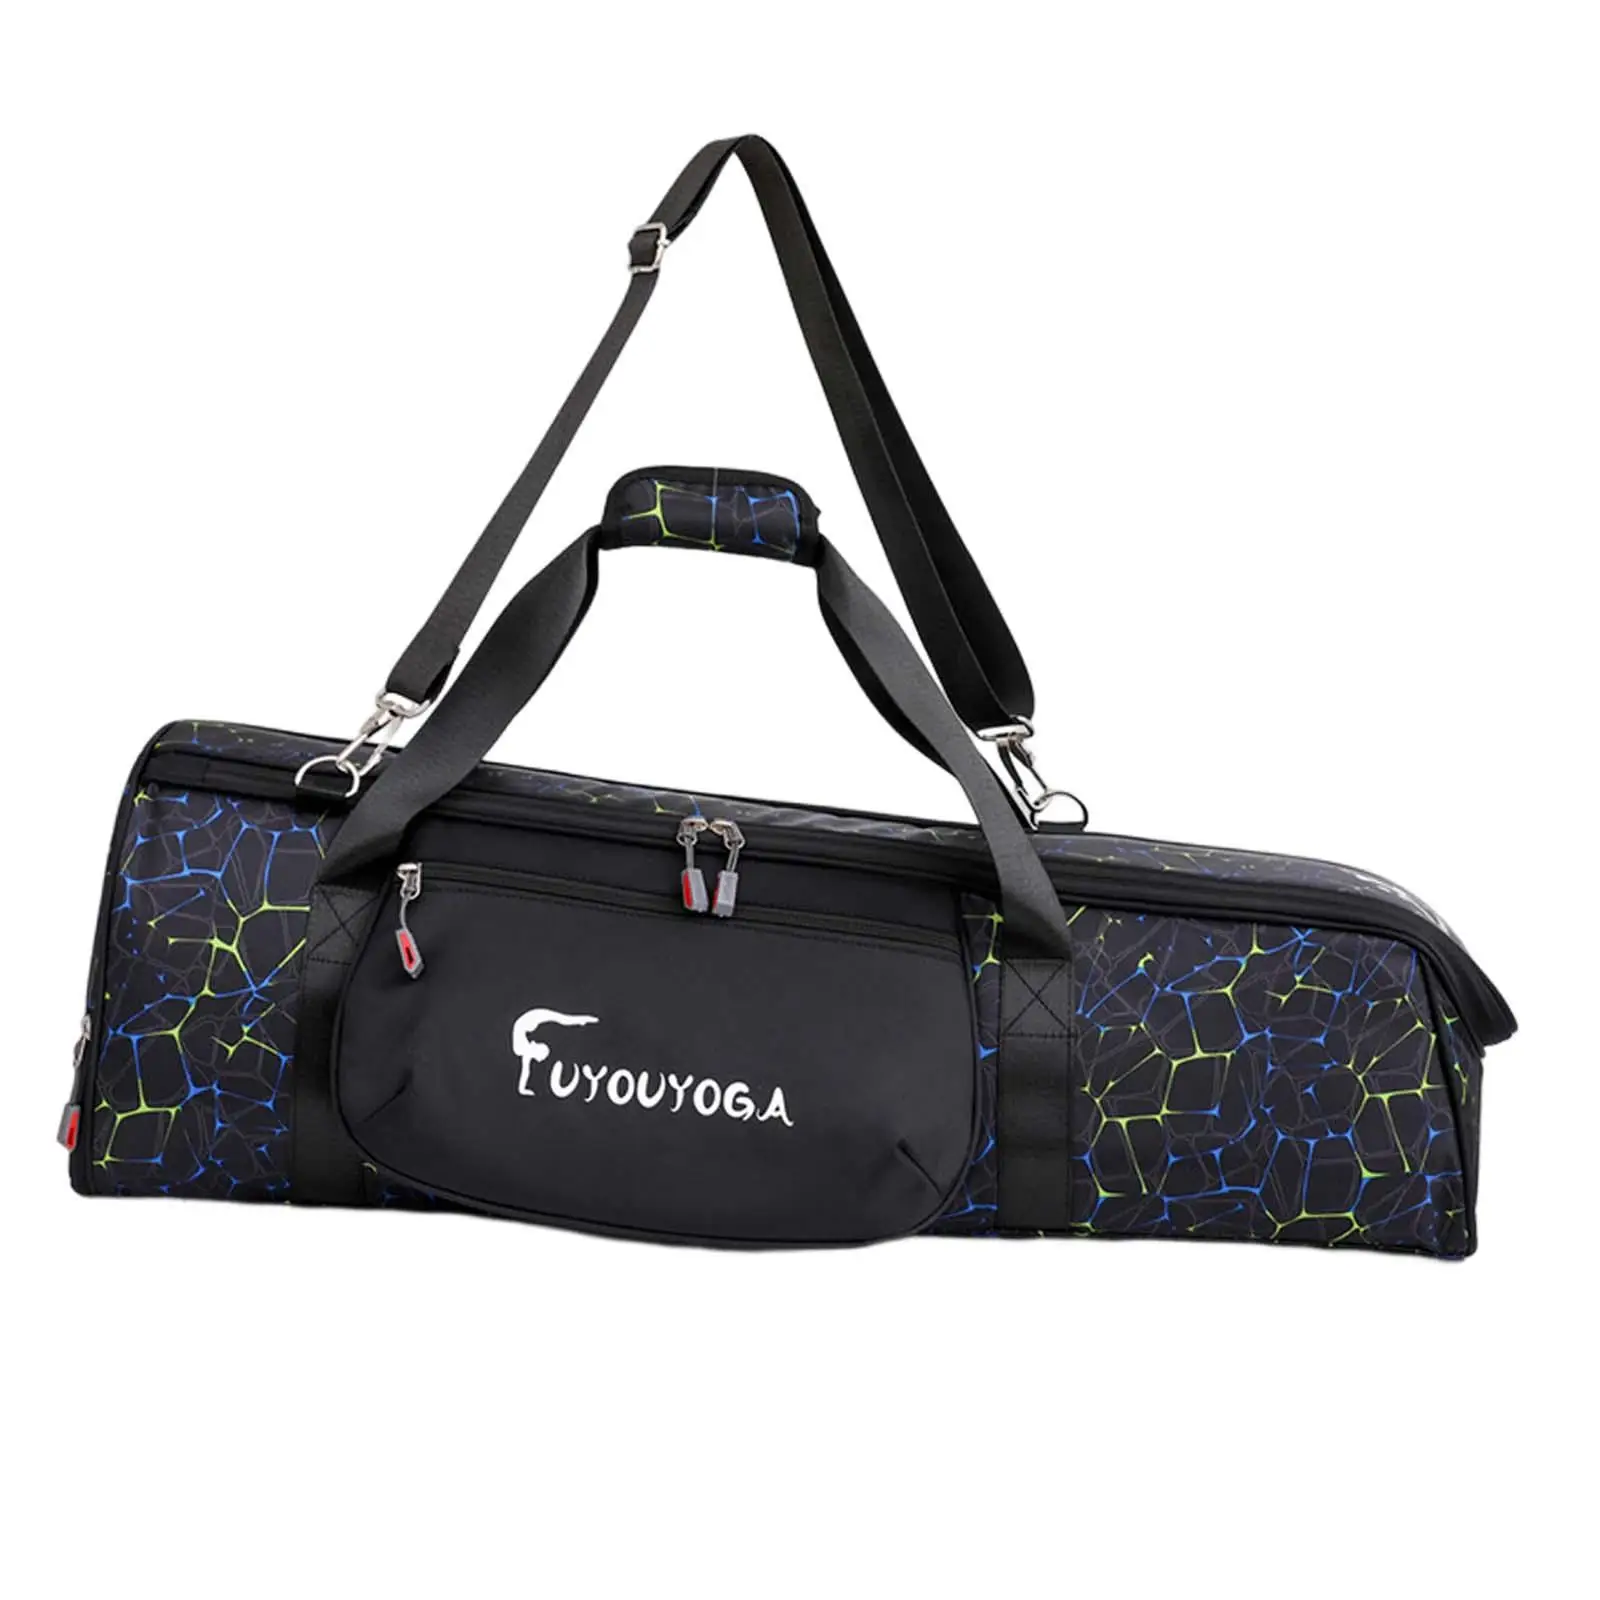 Yoga Mat Carrier Case Tote Carrying Bag Lightweight Stuff Sack Yoga Mat Bag Storage Bag for Shopping Yoga Fitness